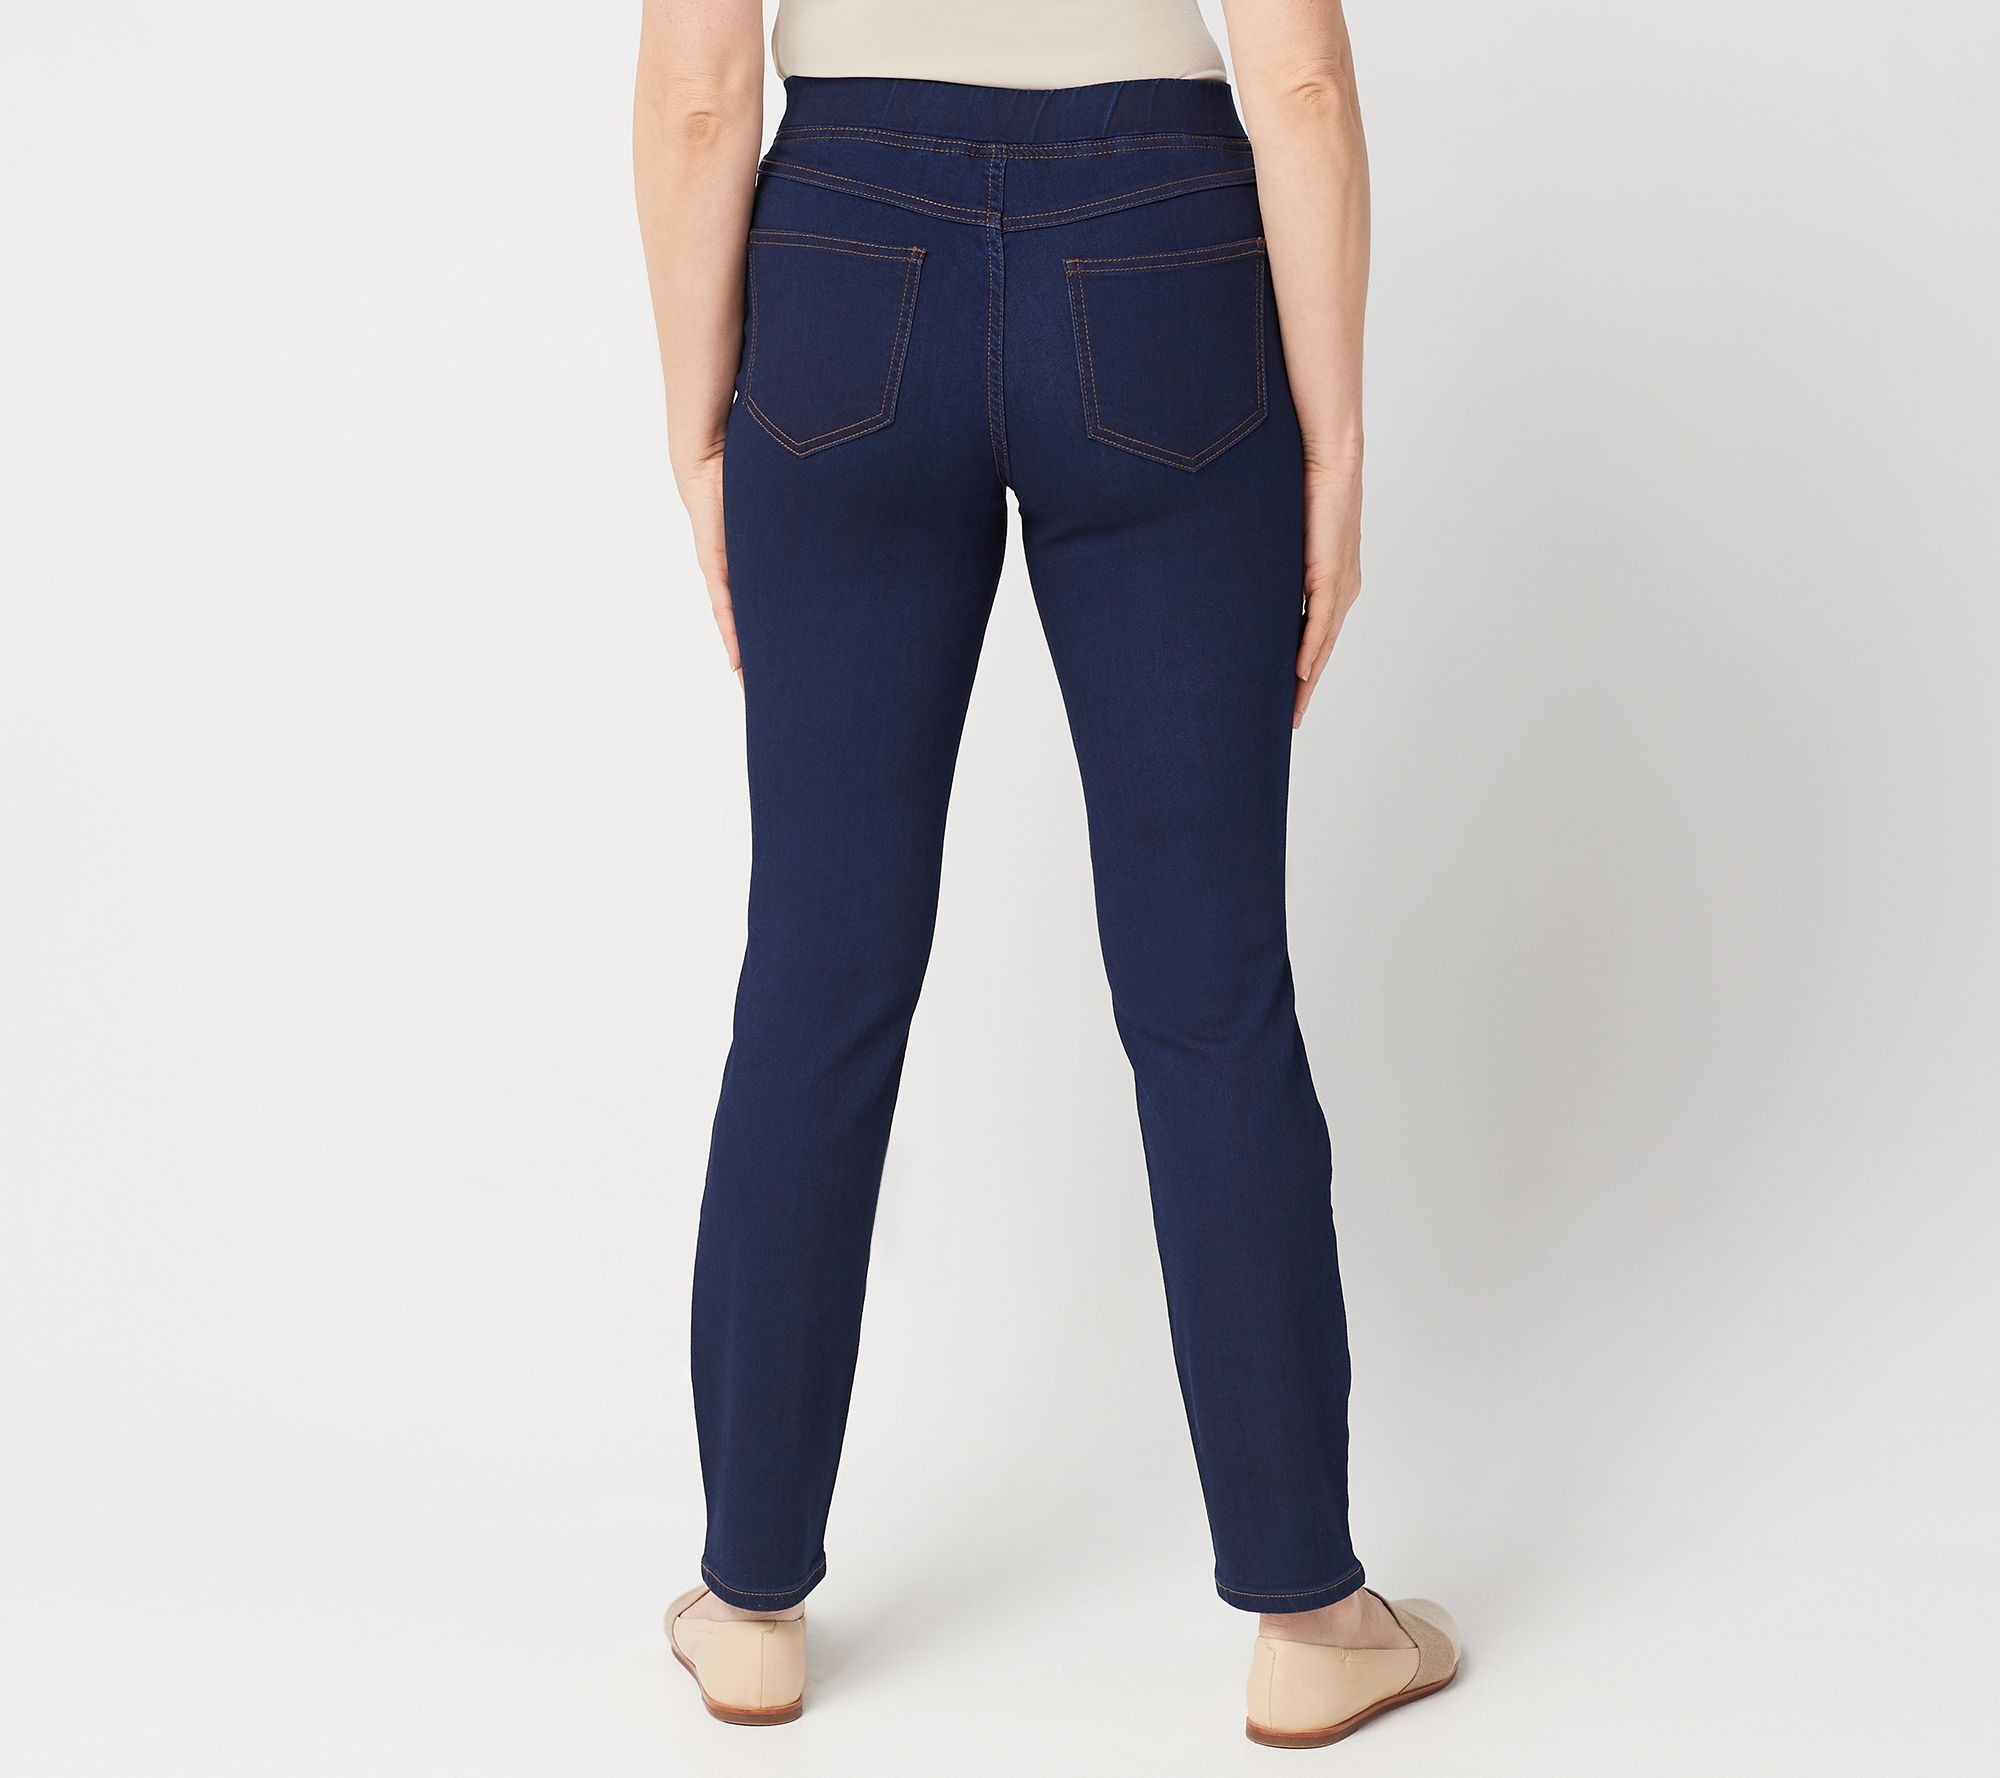 Denim & Co. Petite Soft Stretch Pull-On Full Length Slim Leg Jeans - QVC.com